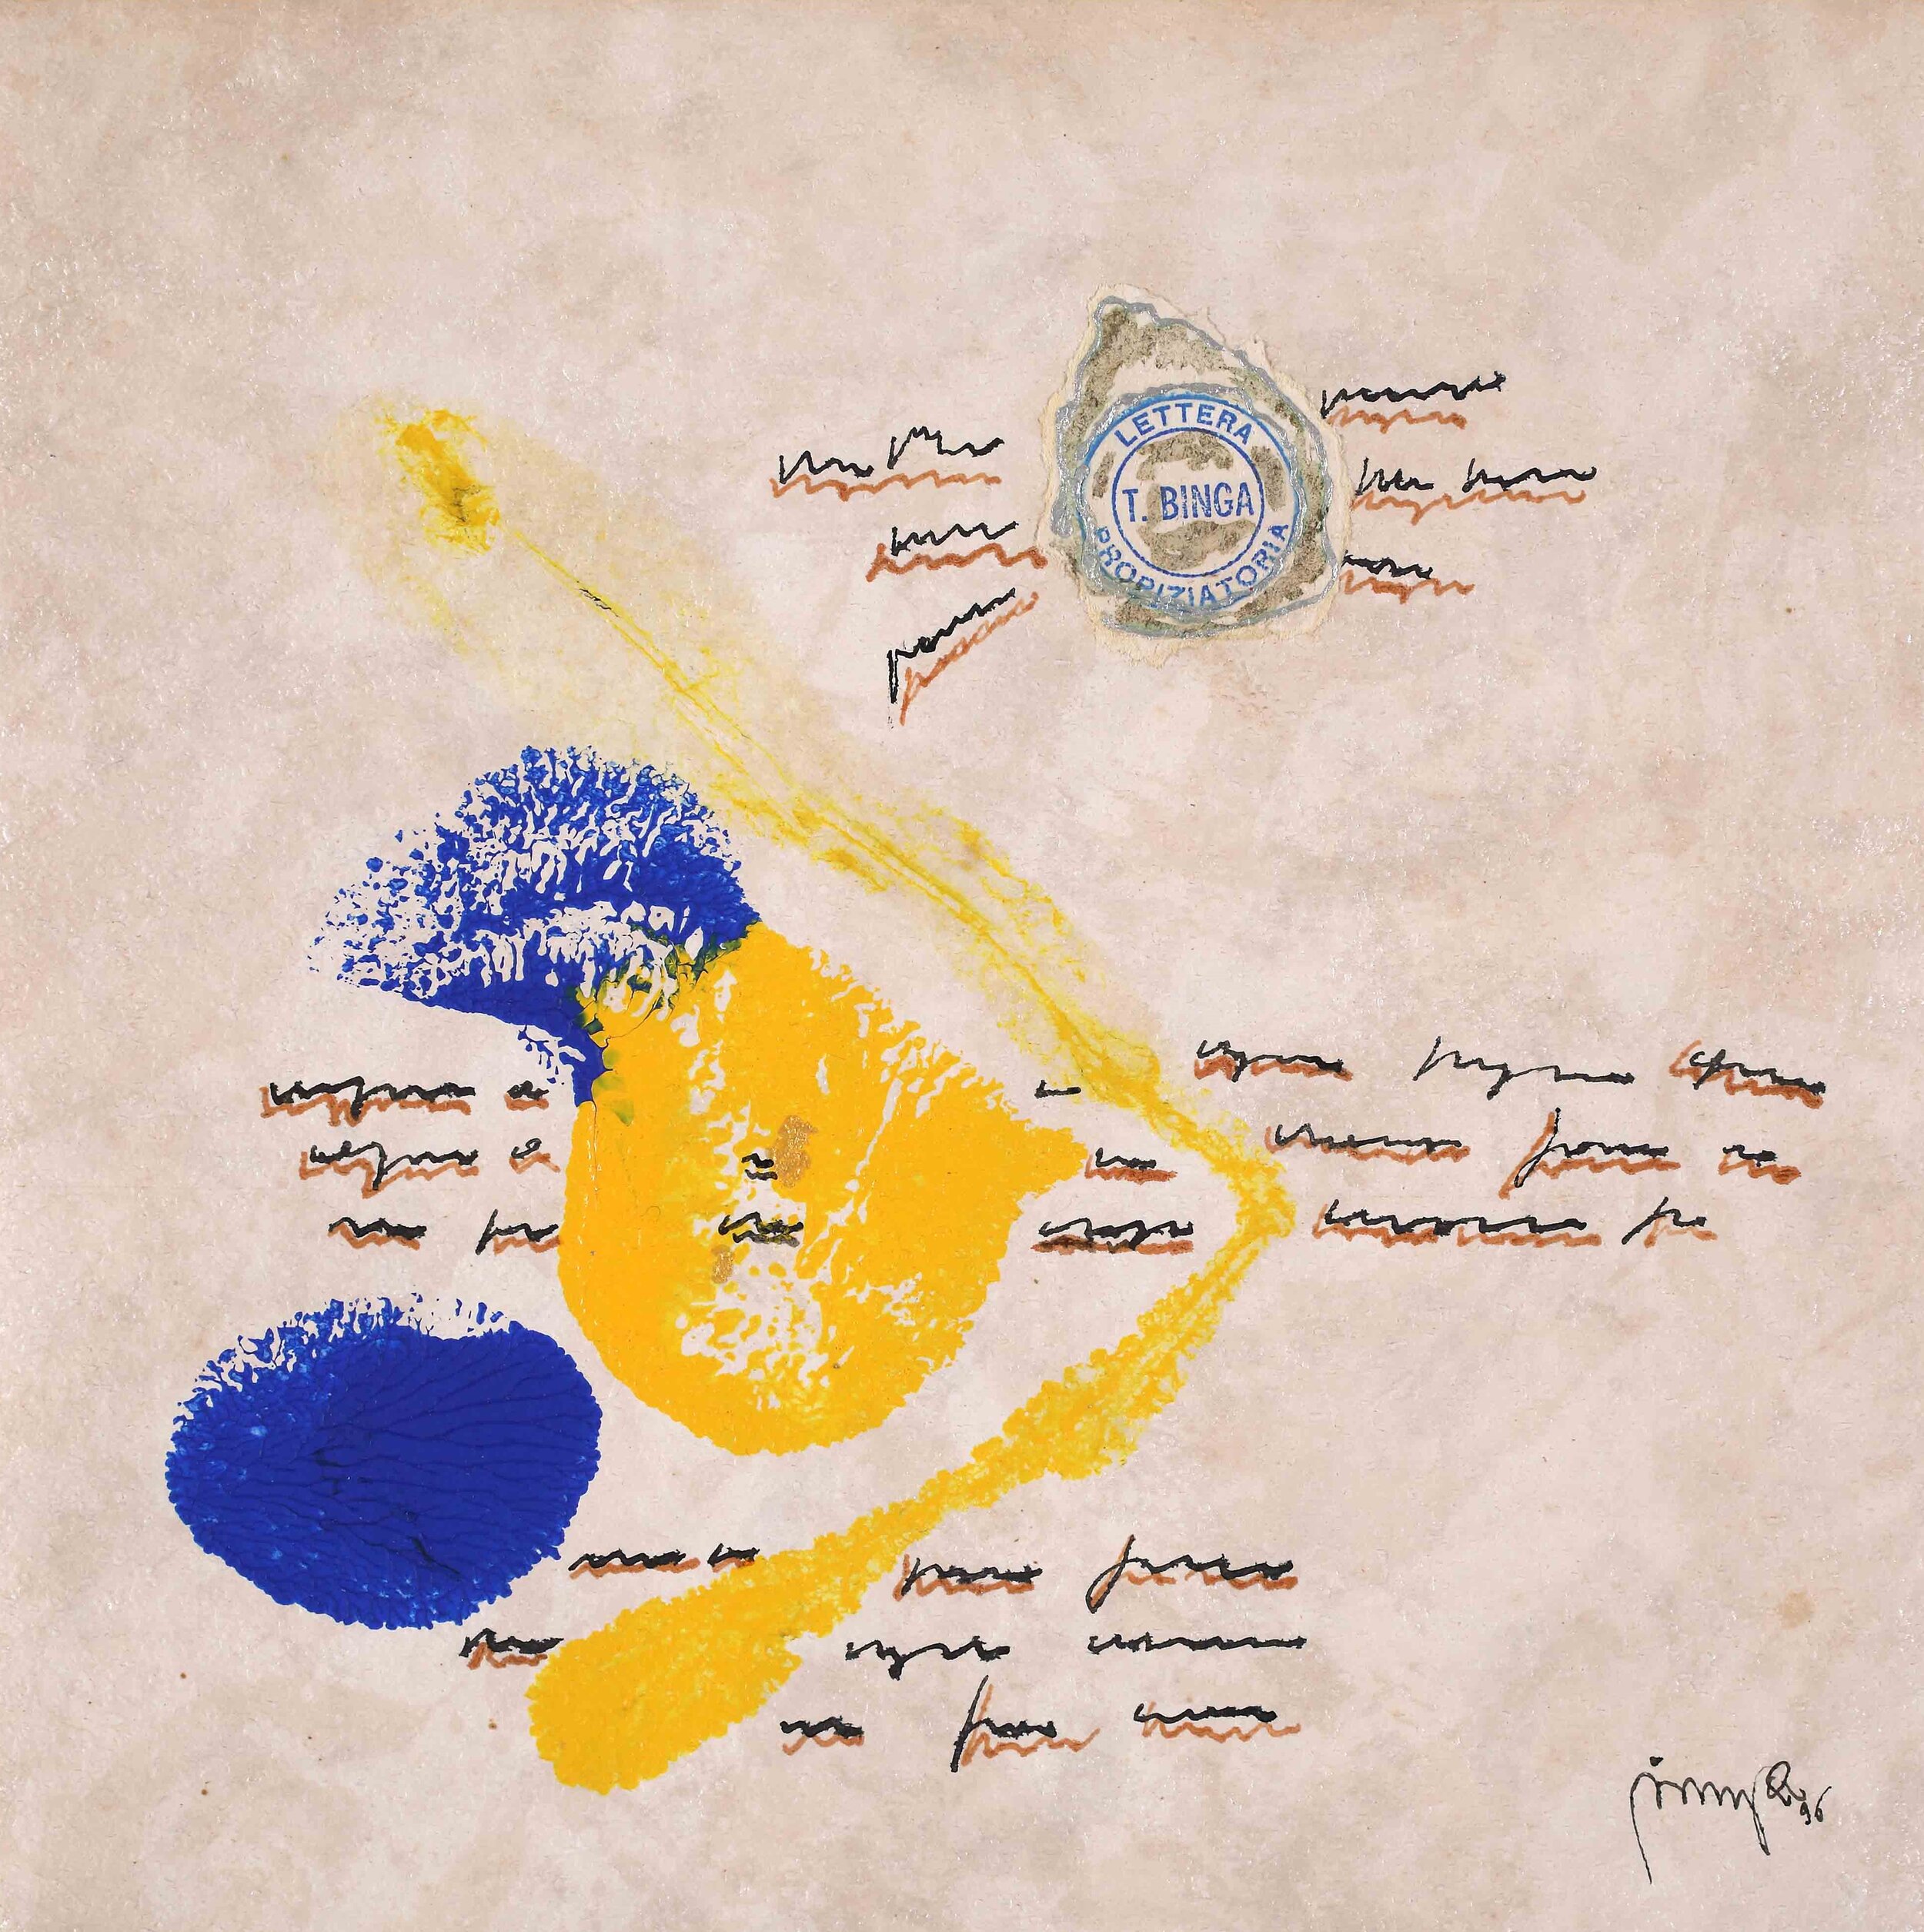 Tomaso Binga, "Propitiatory letter", 1996